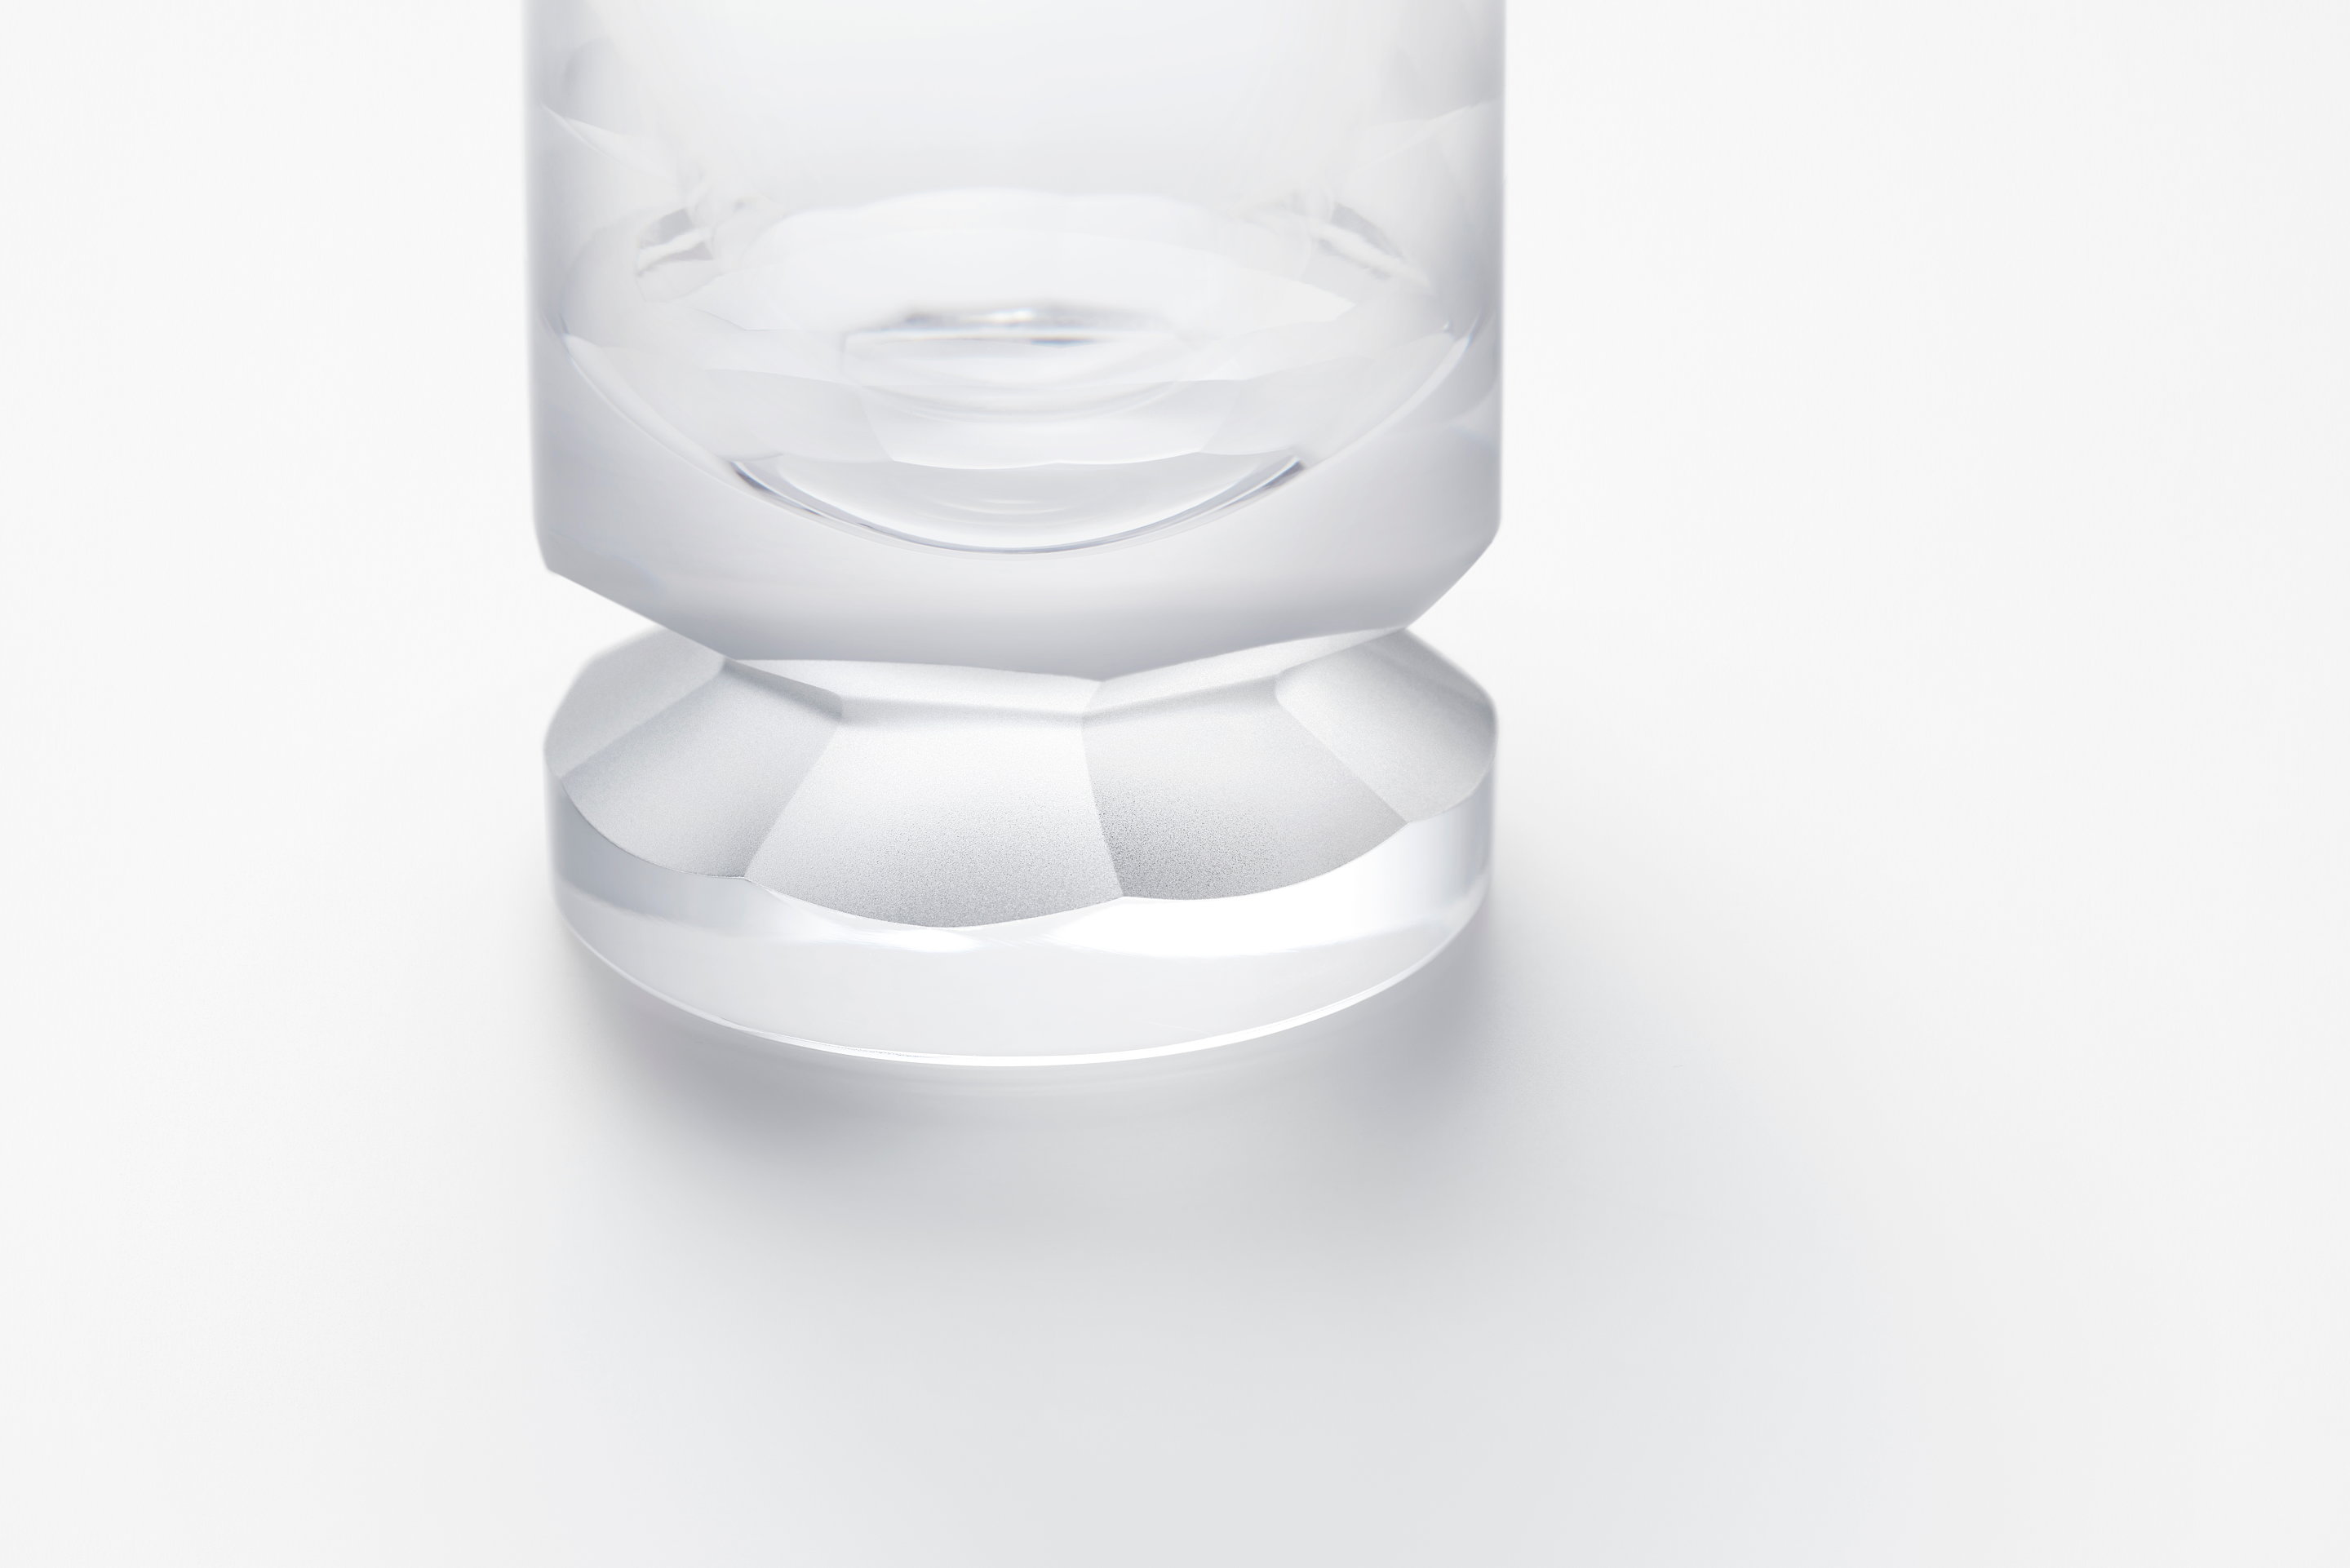  Lasvit Beaver Glassware Collection " class = "aimg lazyload" /> </source> </picture> </figure>
<figure class=